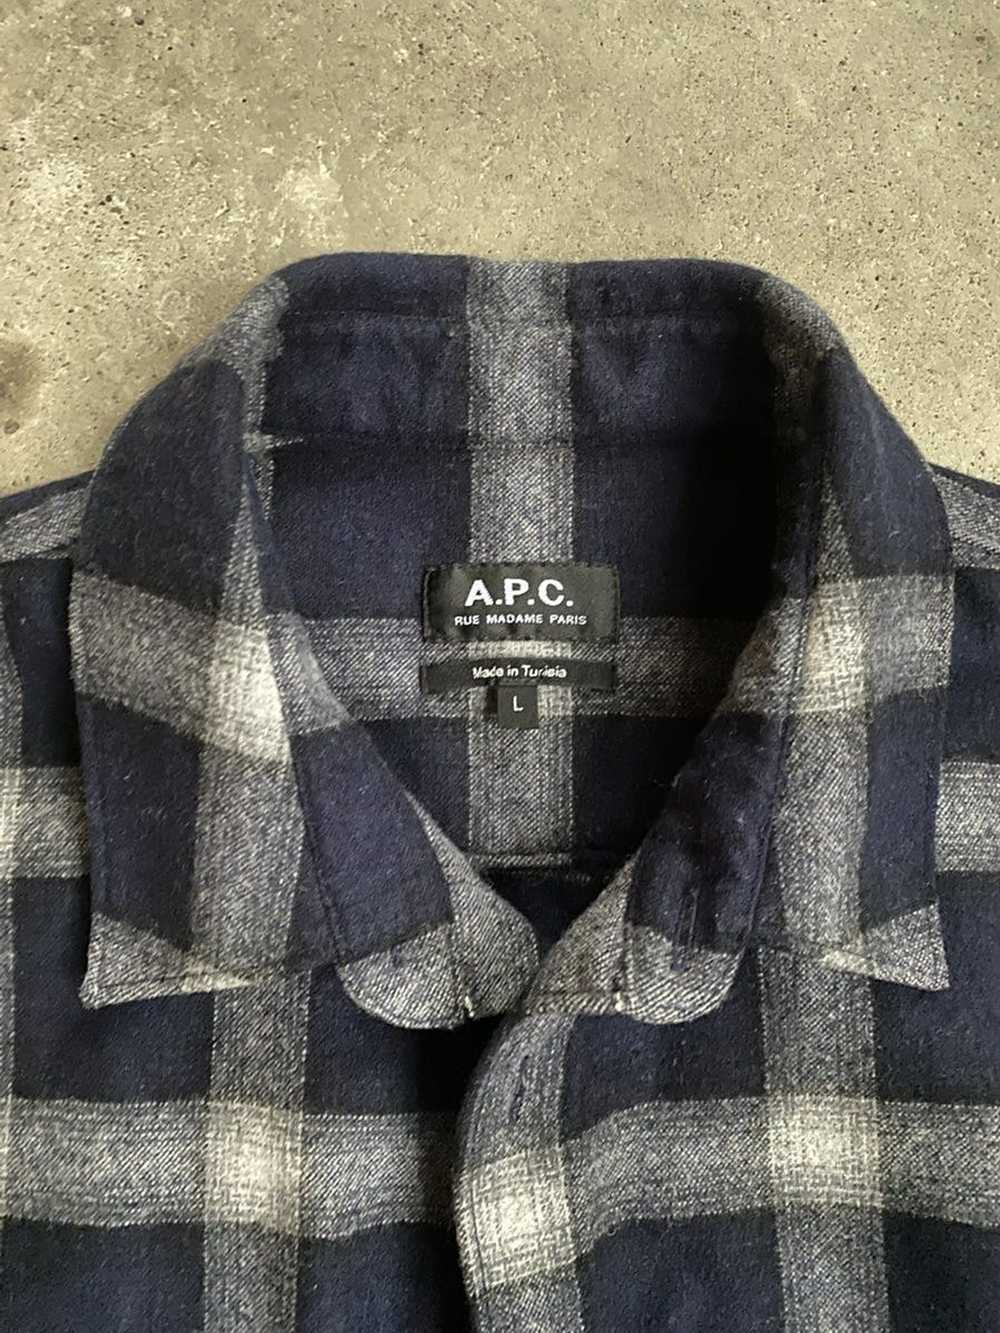 A.P.C. APC Navy Flannel Shirt - image 2